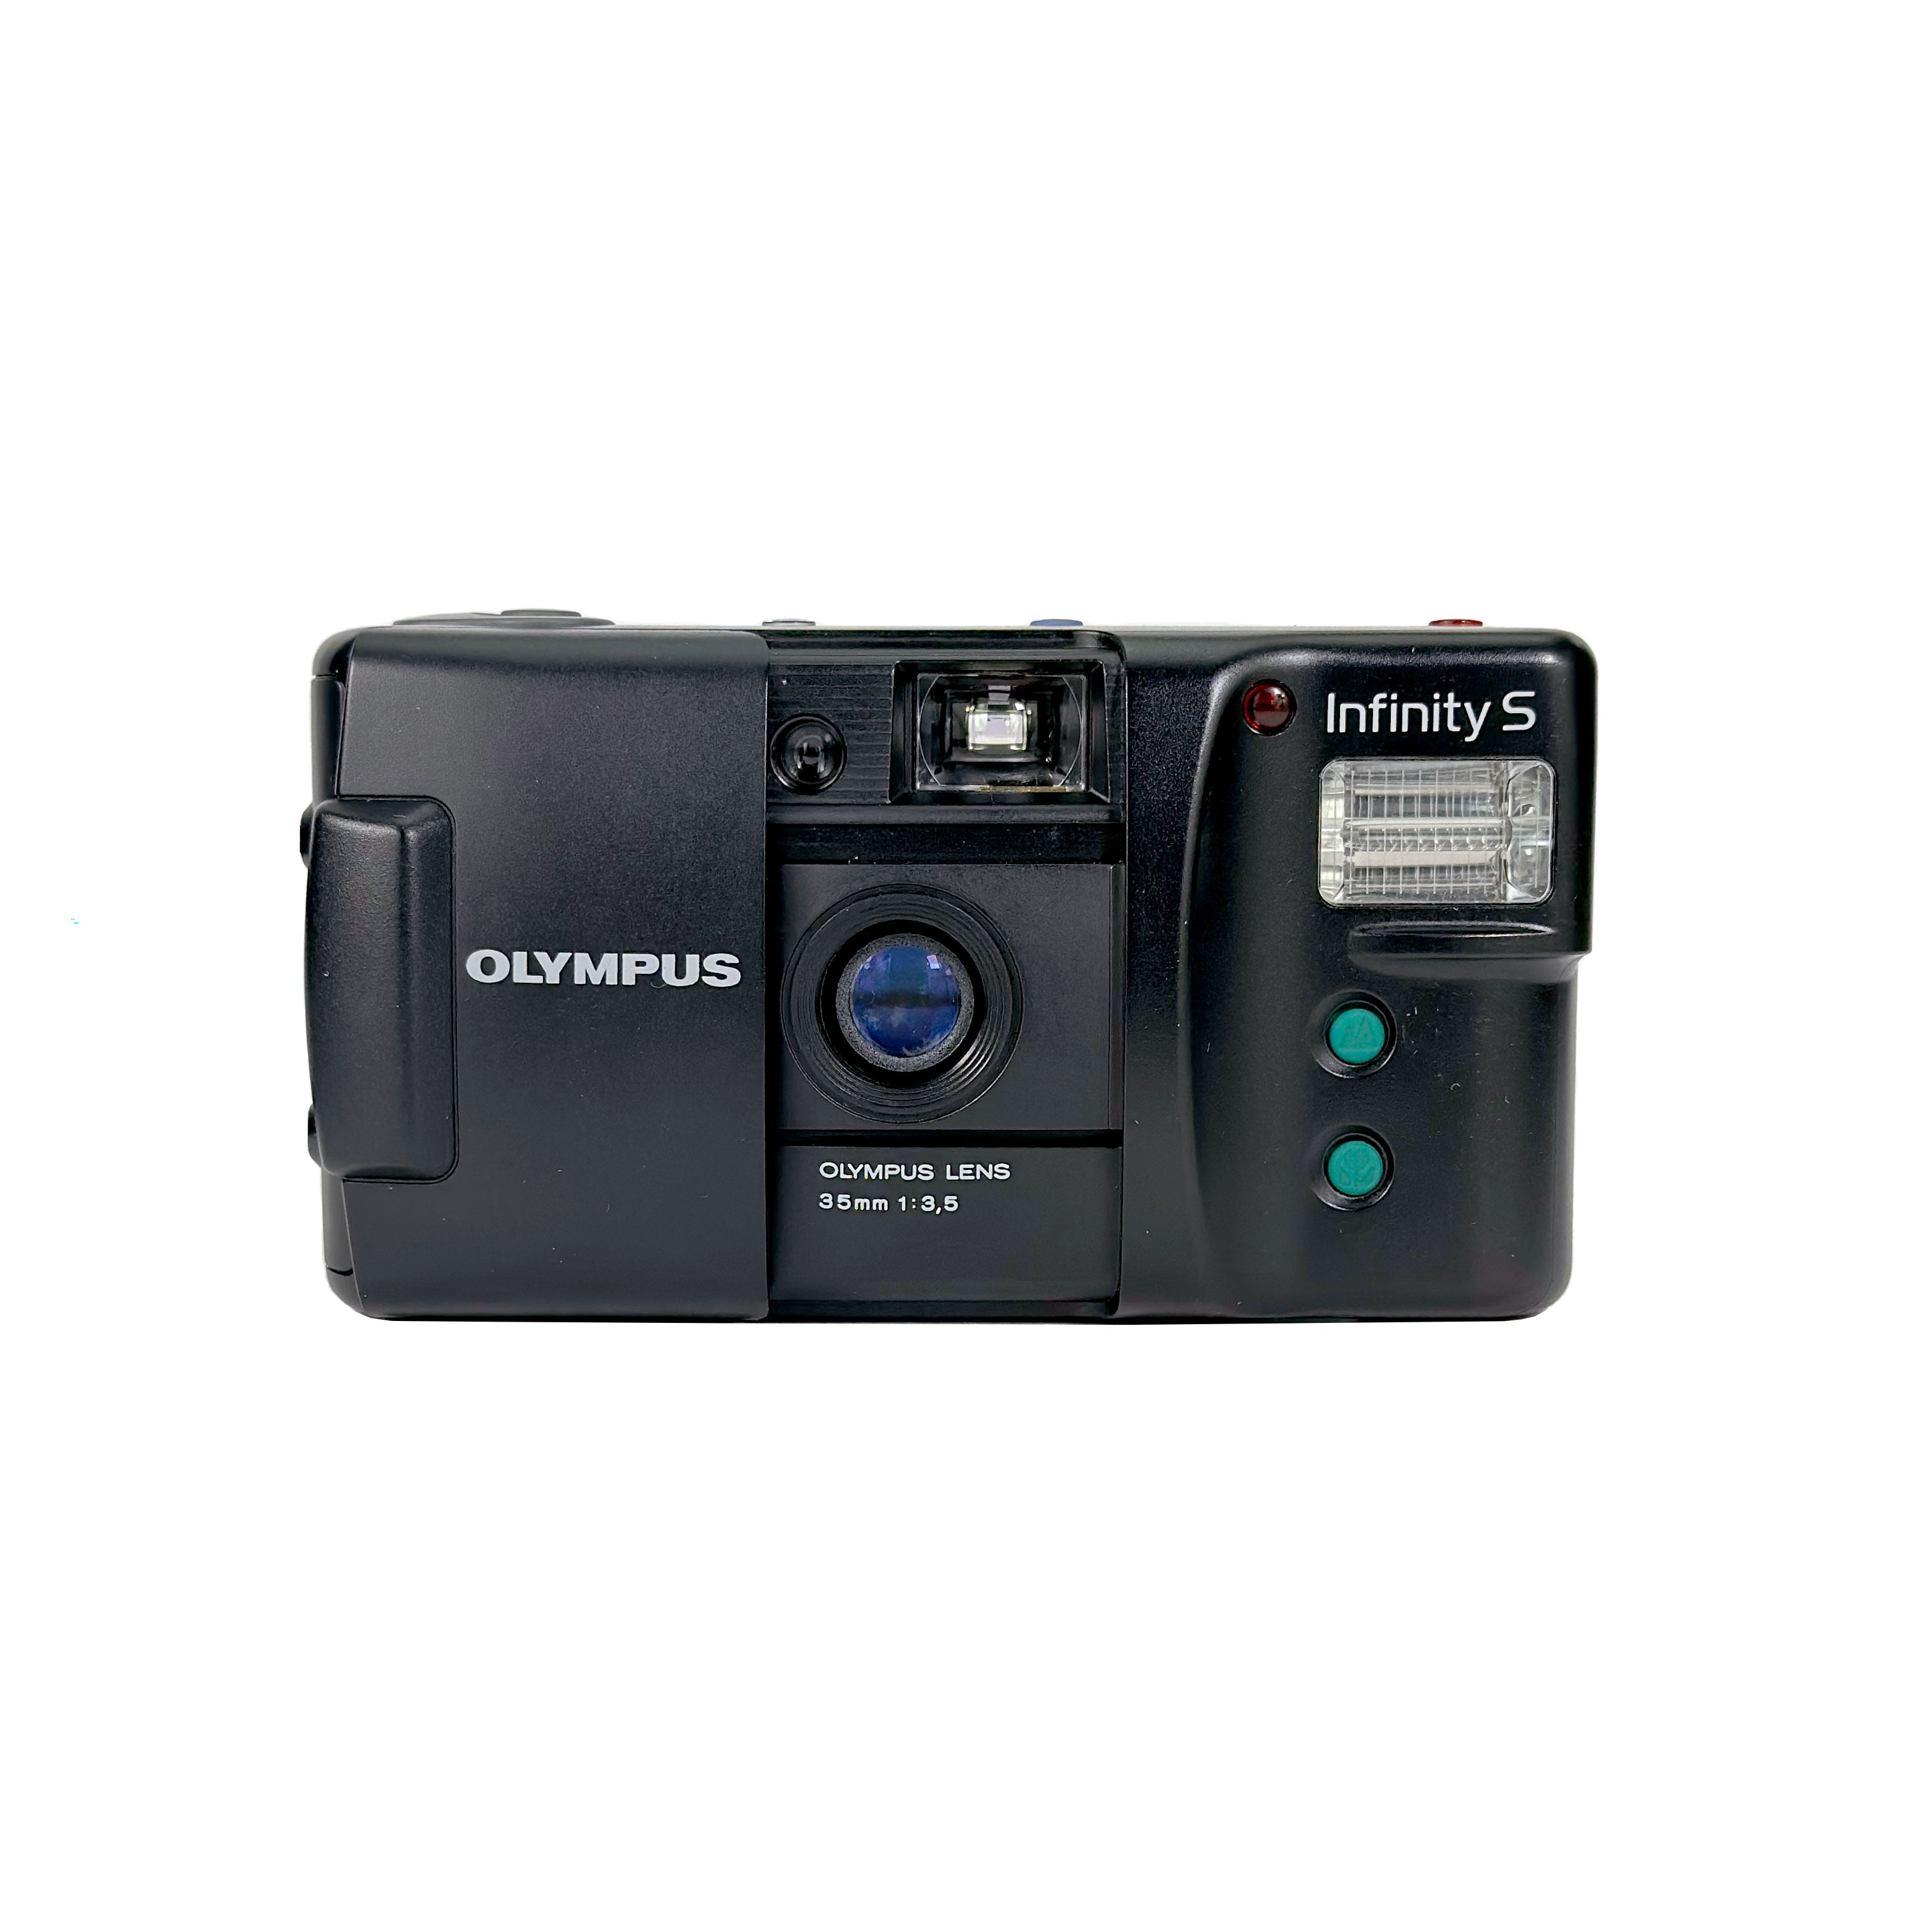 Olympus Infinity S – Retro Camera Shop